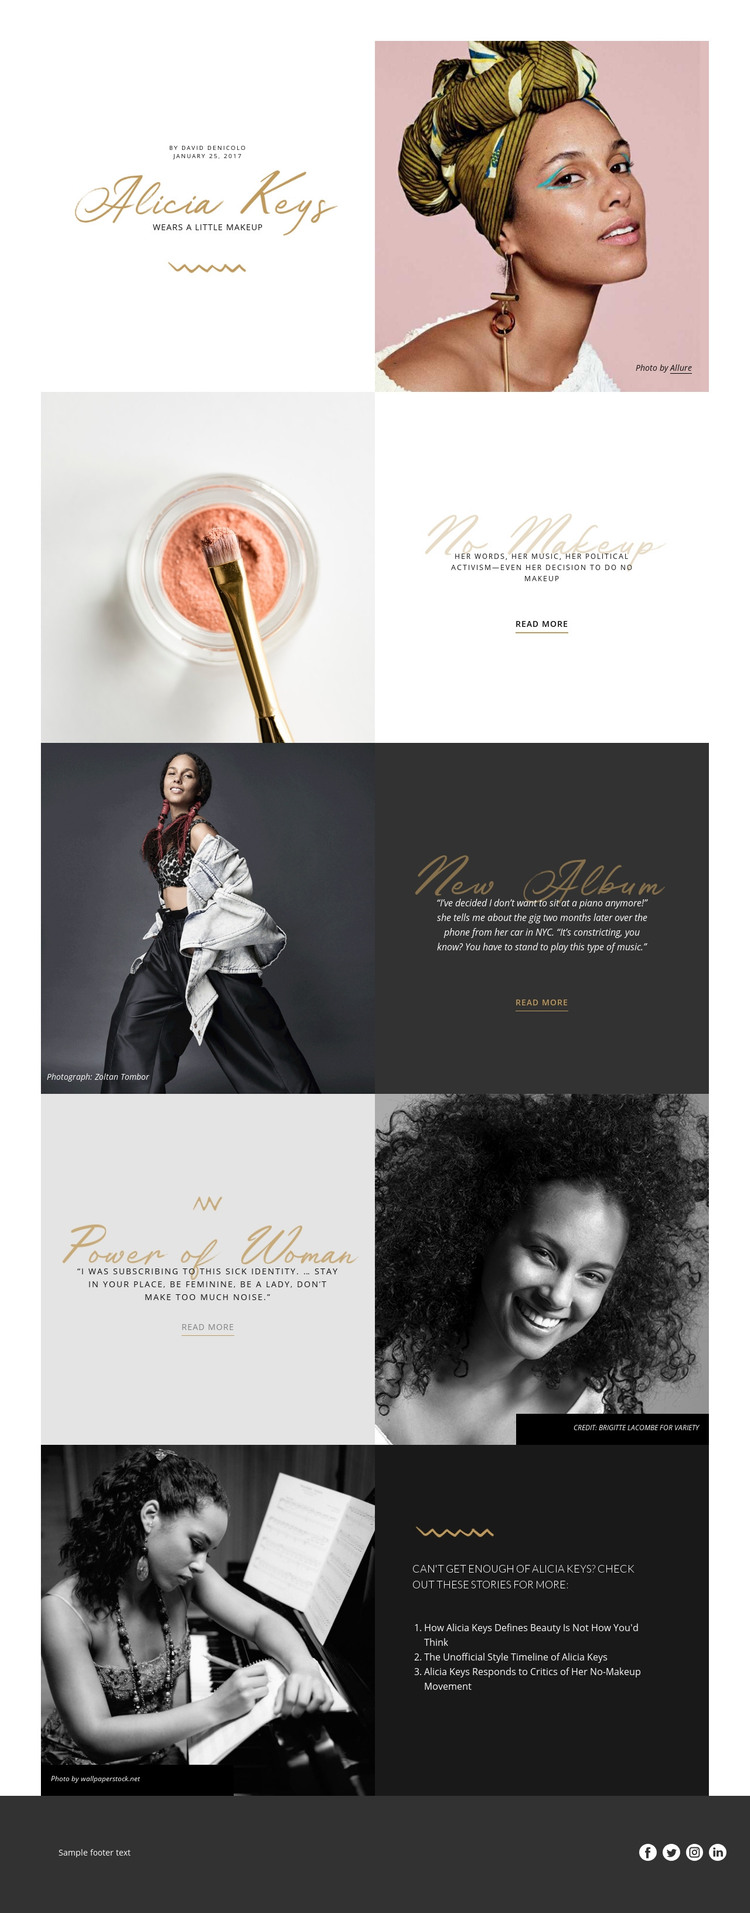 Alicia Keys Homepage Design